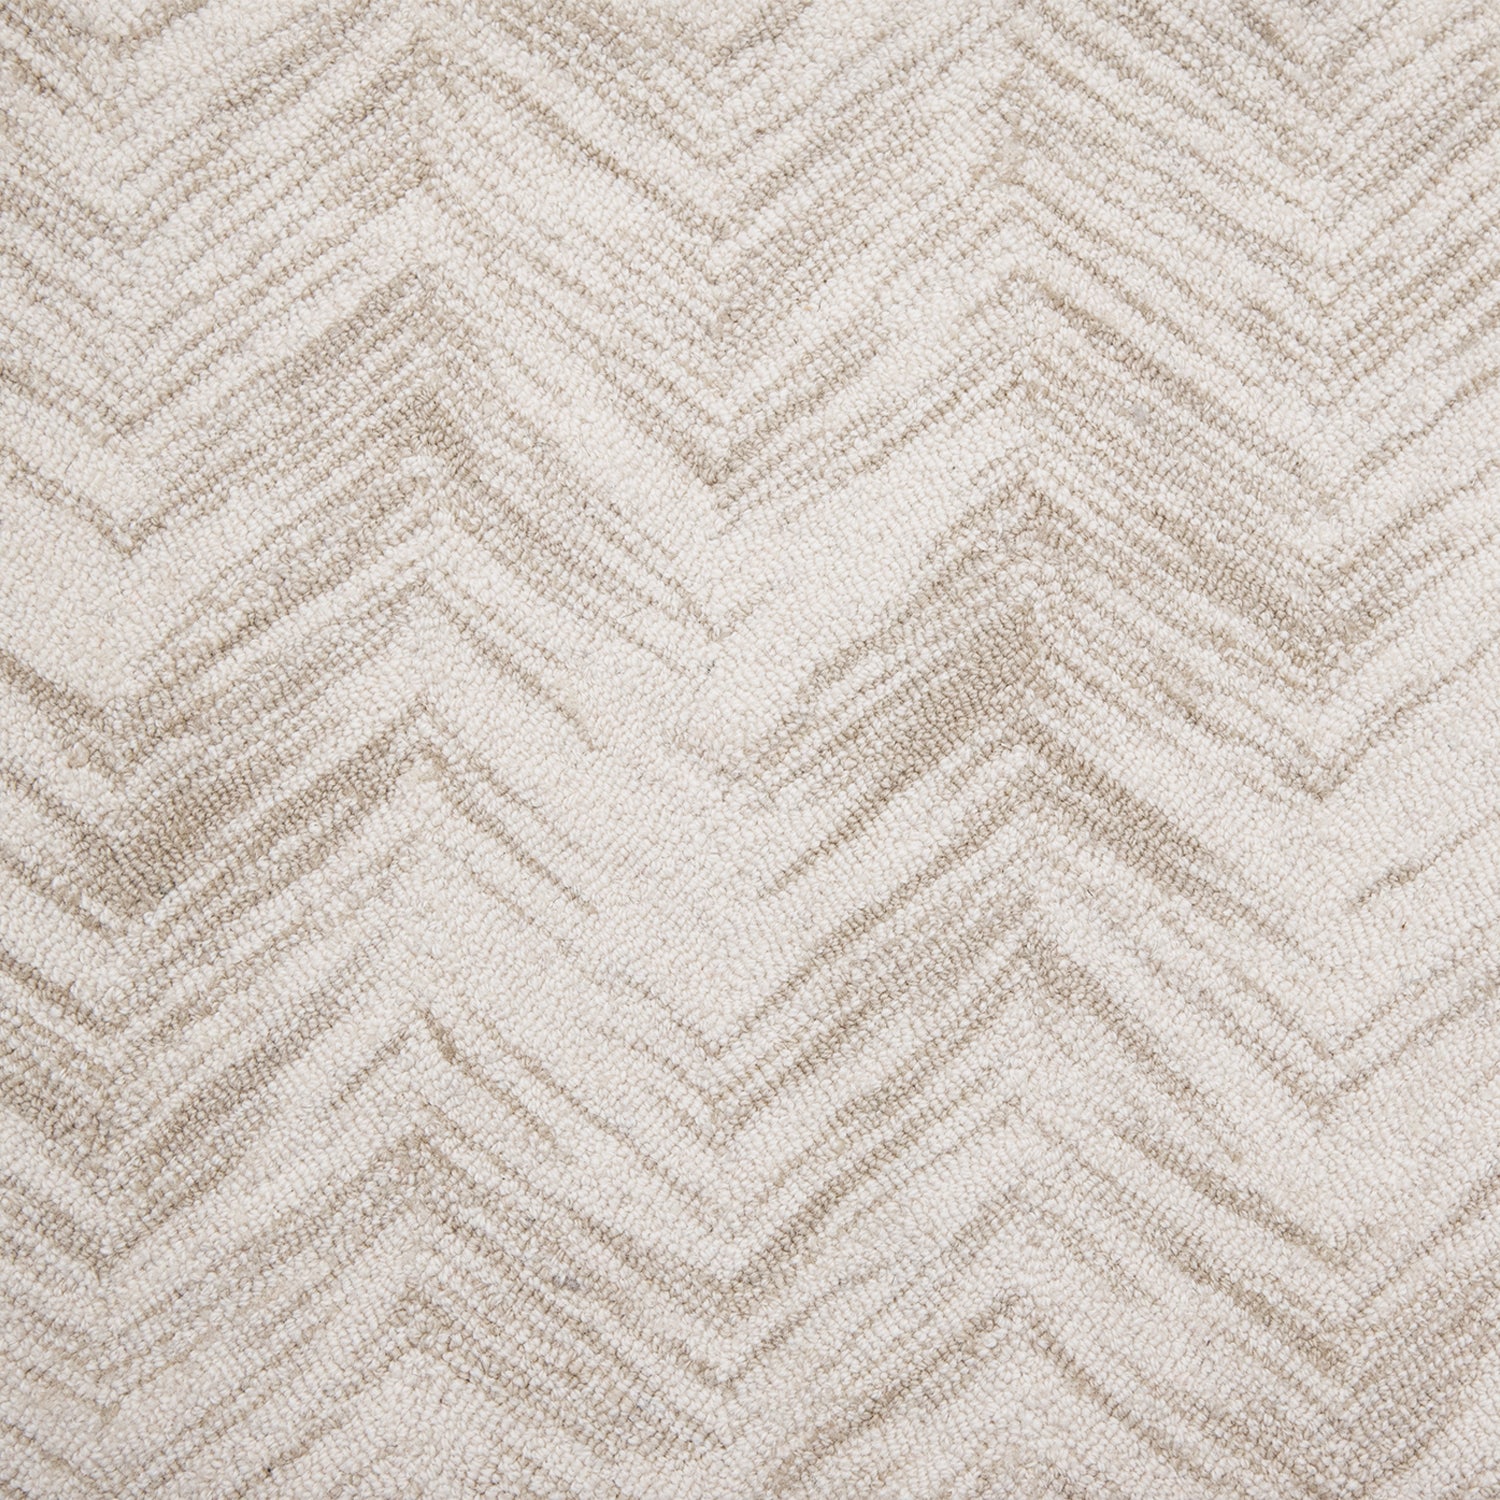 Wool broadloom carpet swatch in a painterly herringbone print in tan on a cream field.